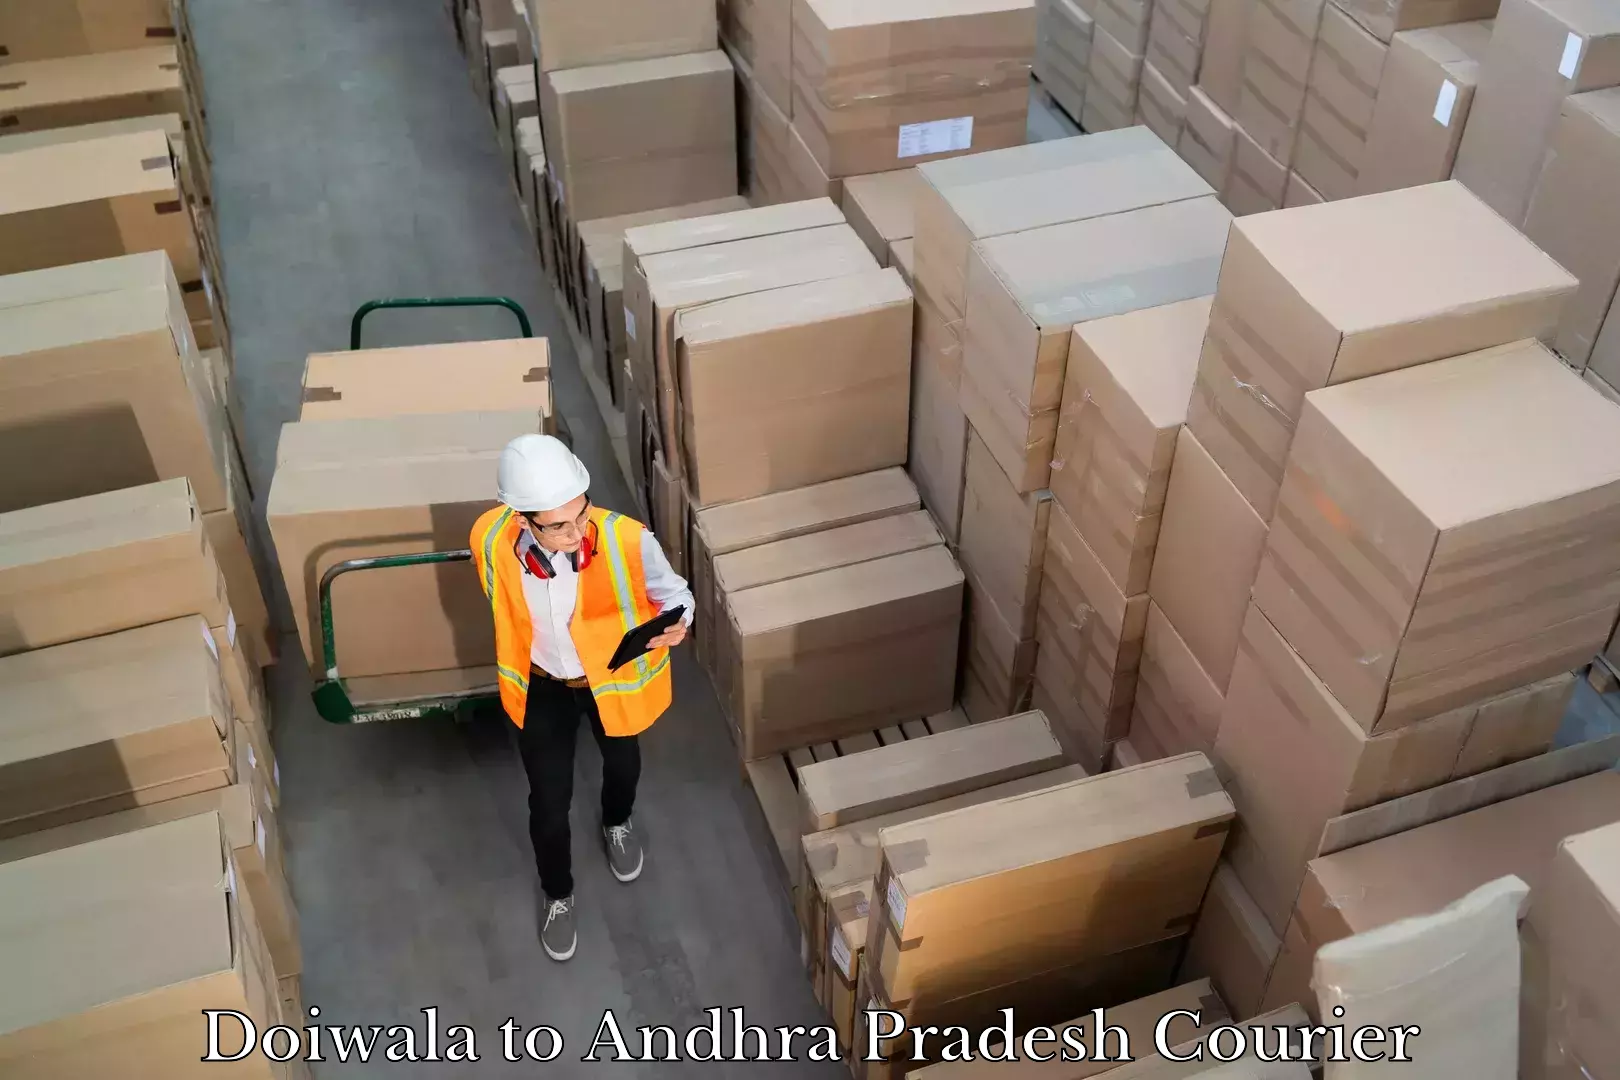 Courier service innovation Doiwala to Andhra Pradesh